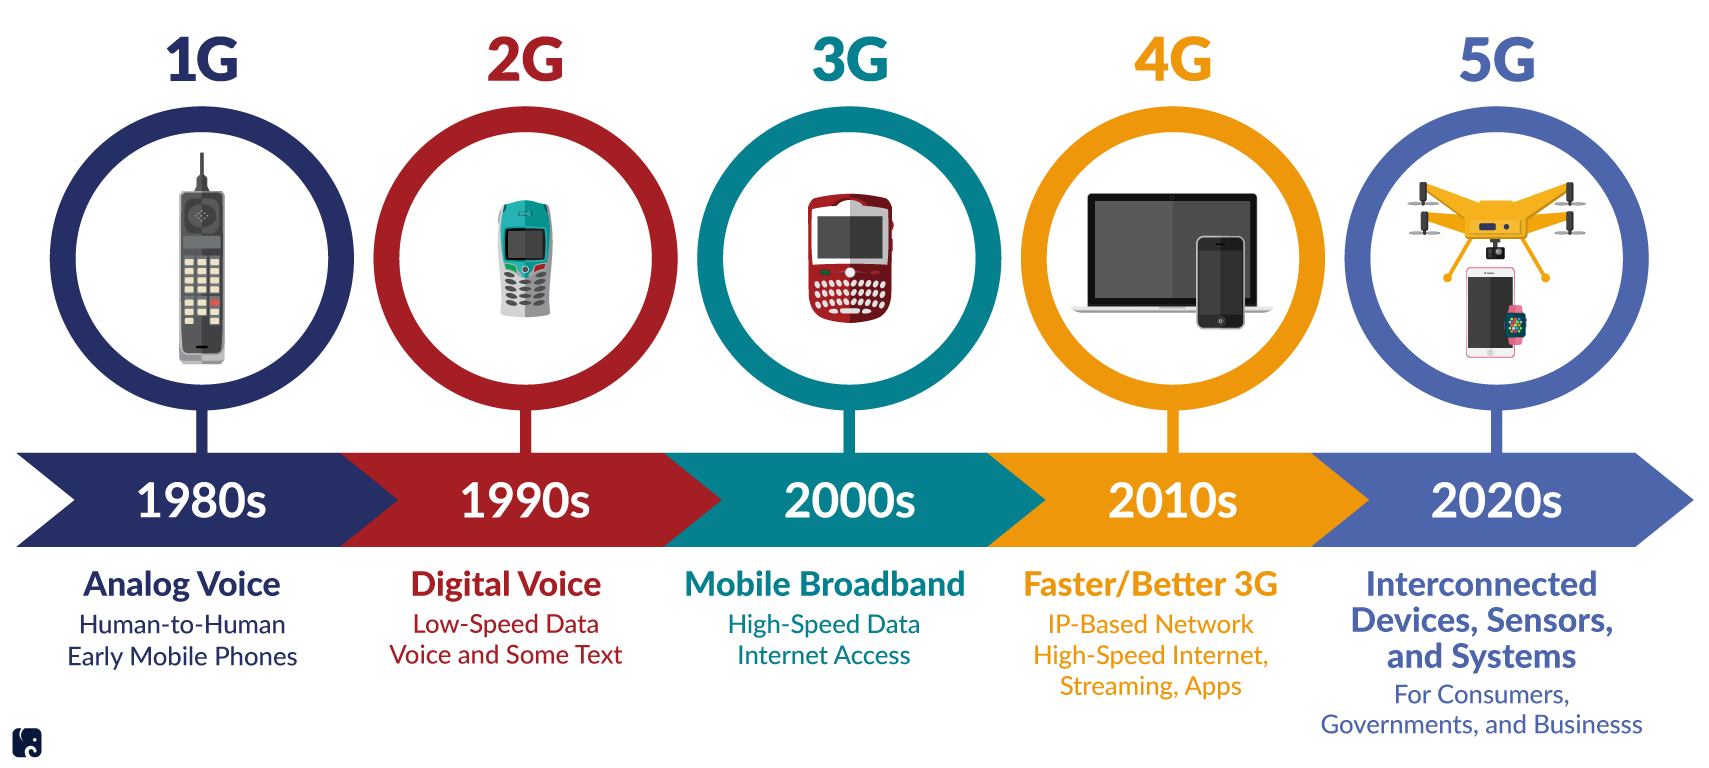 3 g соединение. Технологии сотовой связи 2g 3g 4g. Поколения сотовой связи 2g 3g и 4g. 4g стандарты сотовой сети. Сотовая связь 1g 2g 3g 4g 5g.